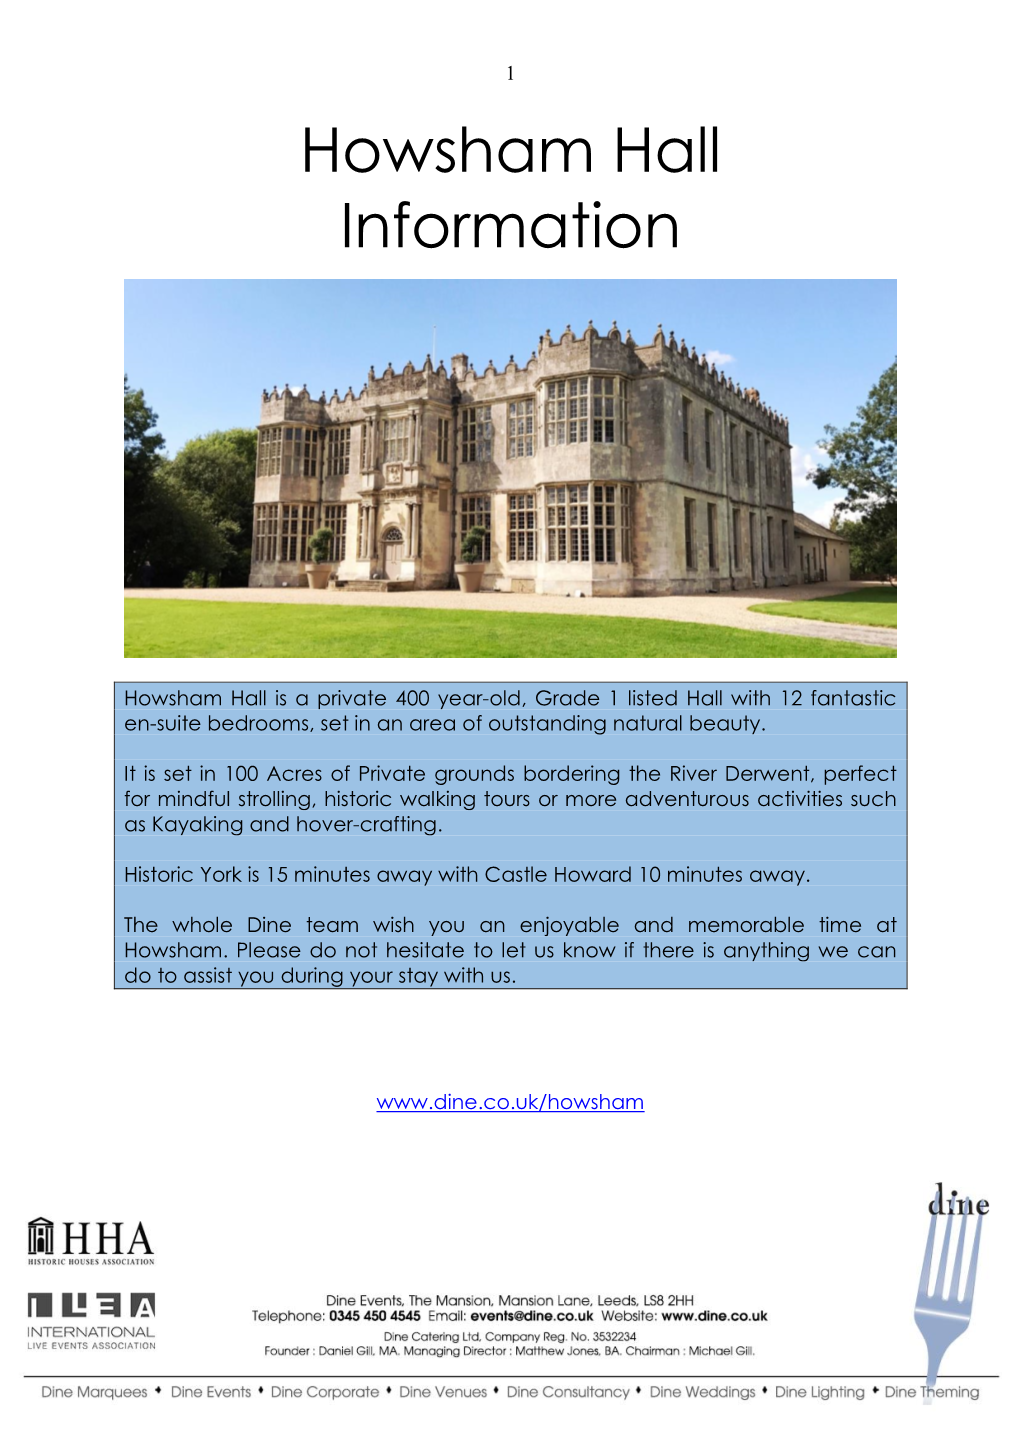 Howsham Hall Information